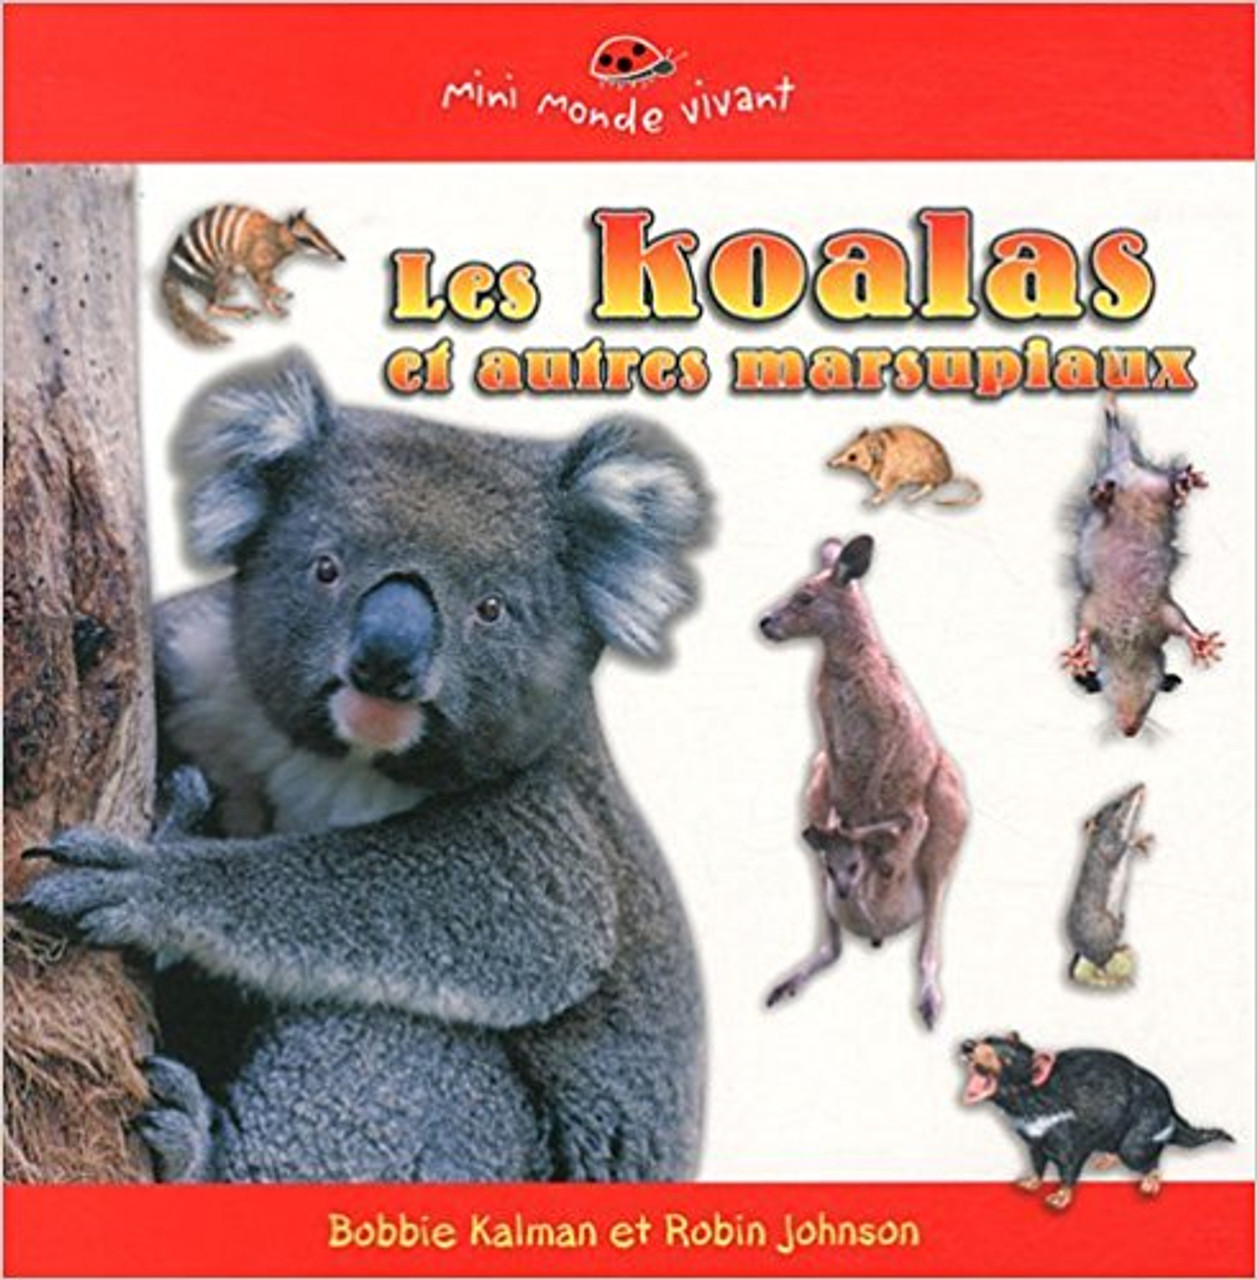 Les Koalas et Autres Marsupiax by Bobbie Kalman